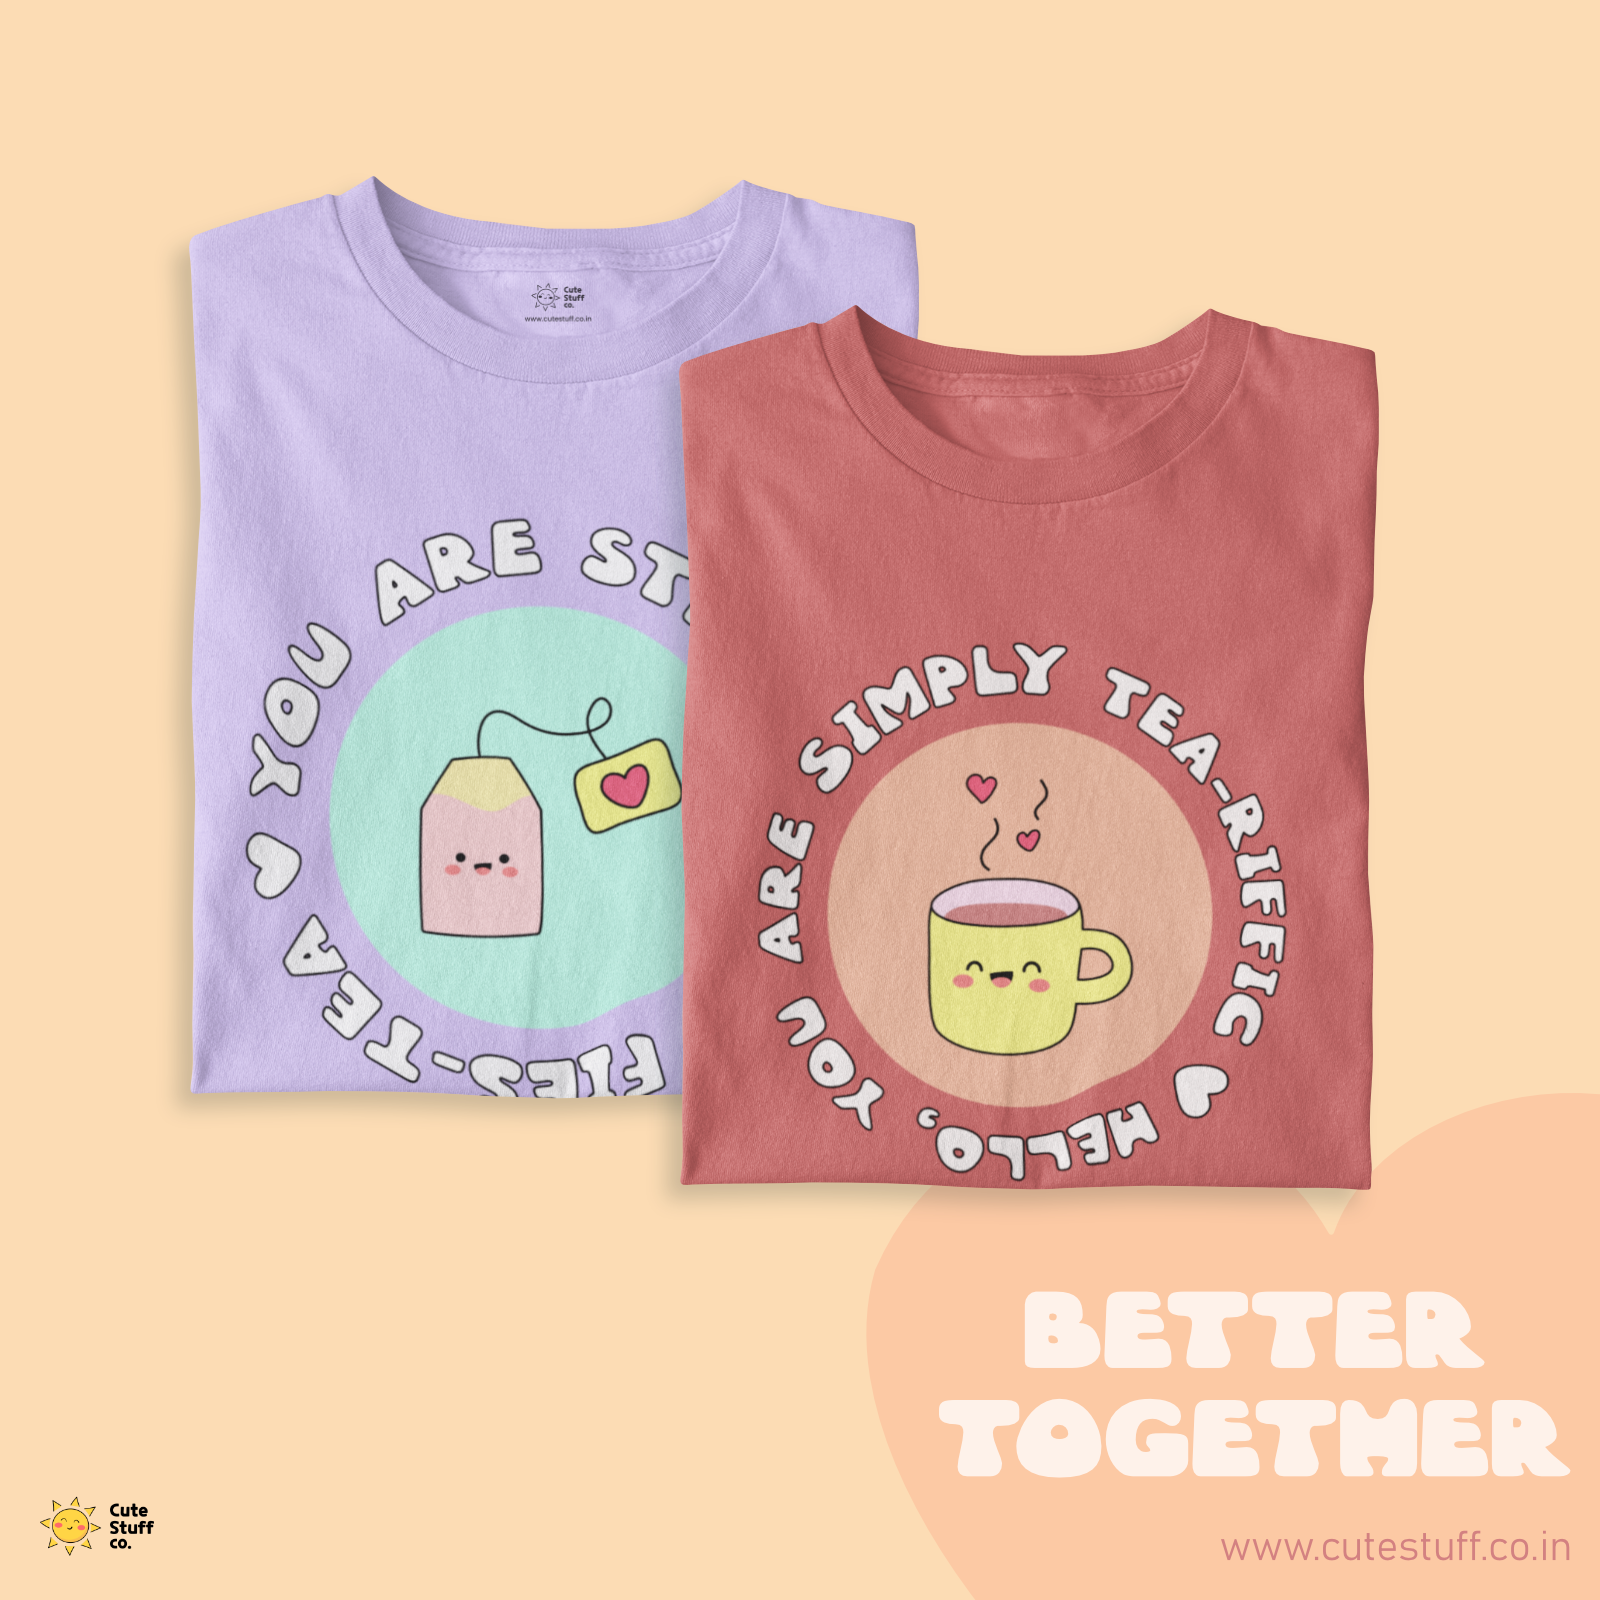 Tea-rrific & Fies-tea You Oversized T-shirts - Better Together